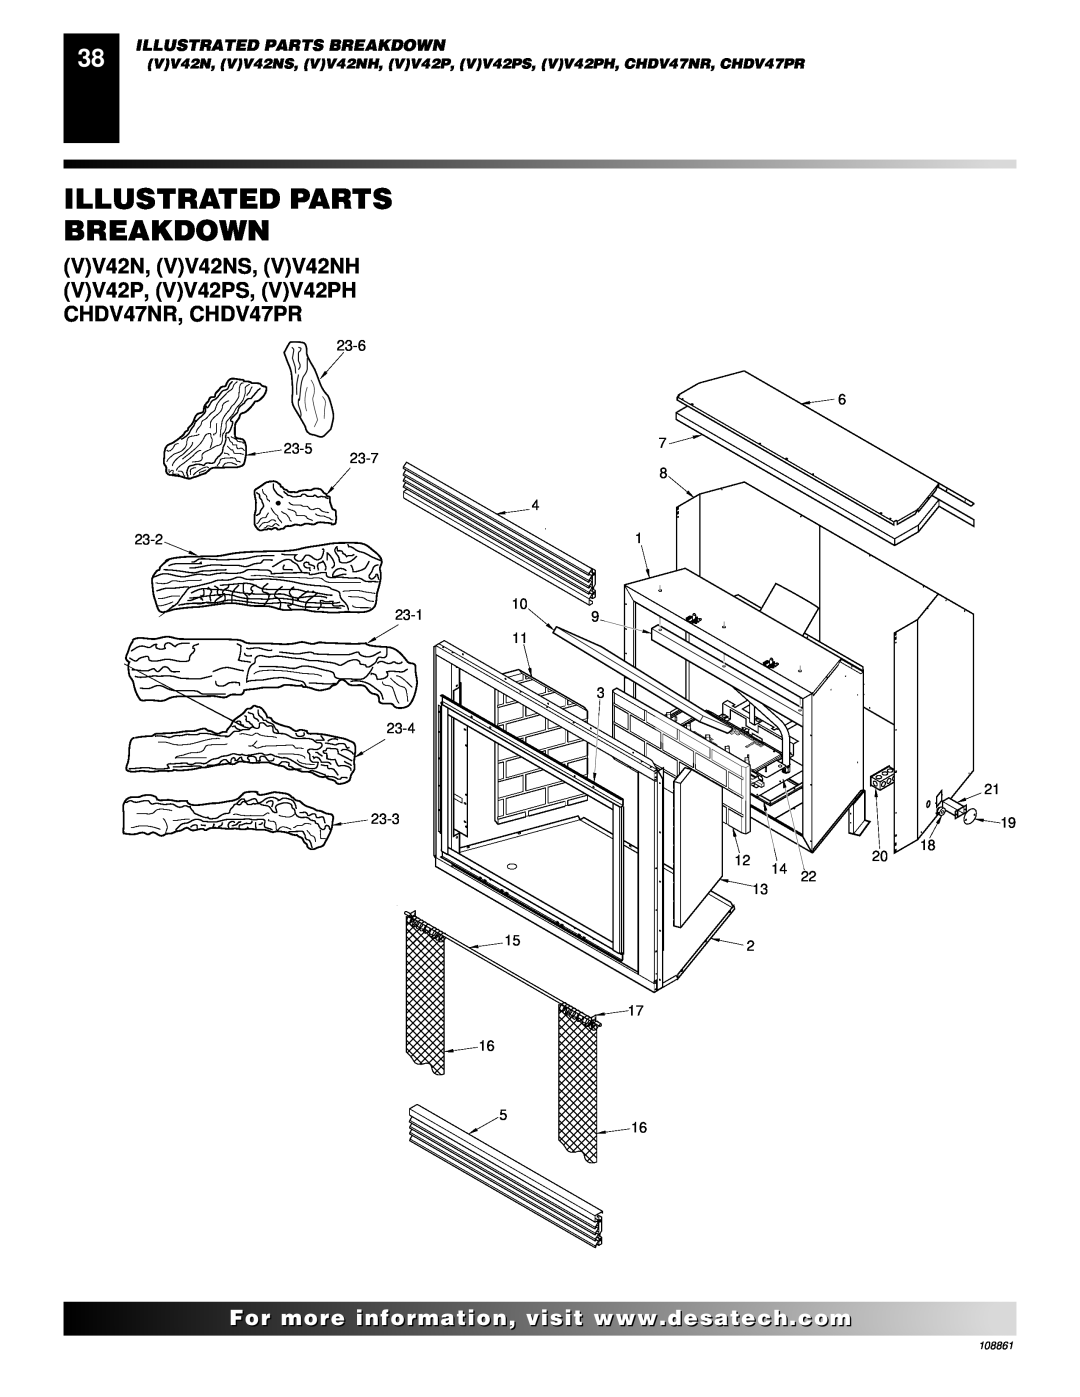 Desa CHDV47PR, (V)V36N, CHDV47NR installation manual Illustrated Parts Breakdown 